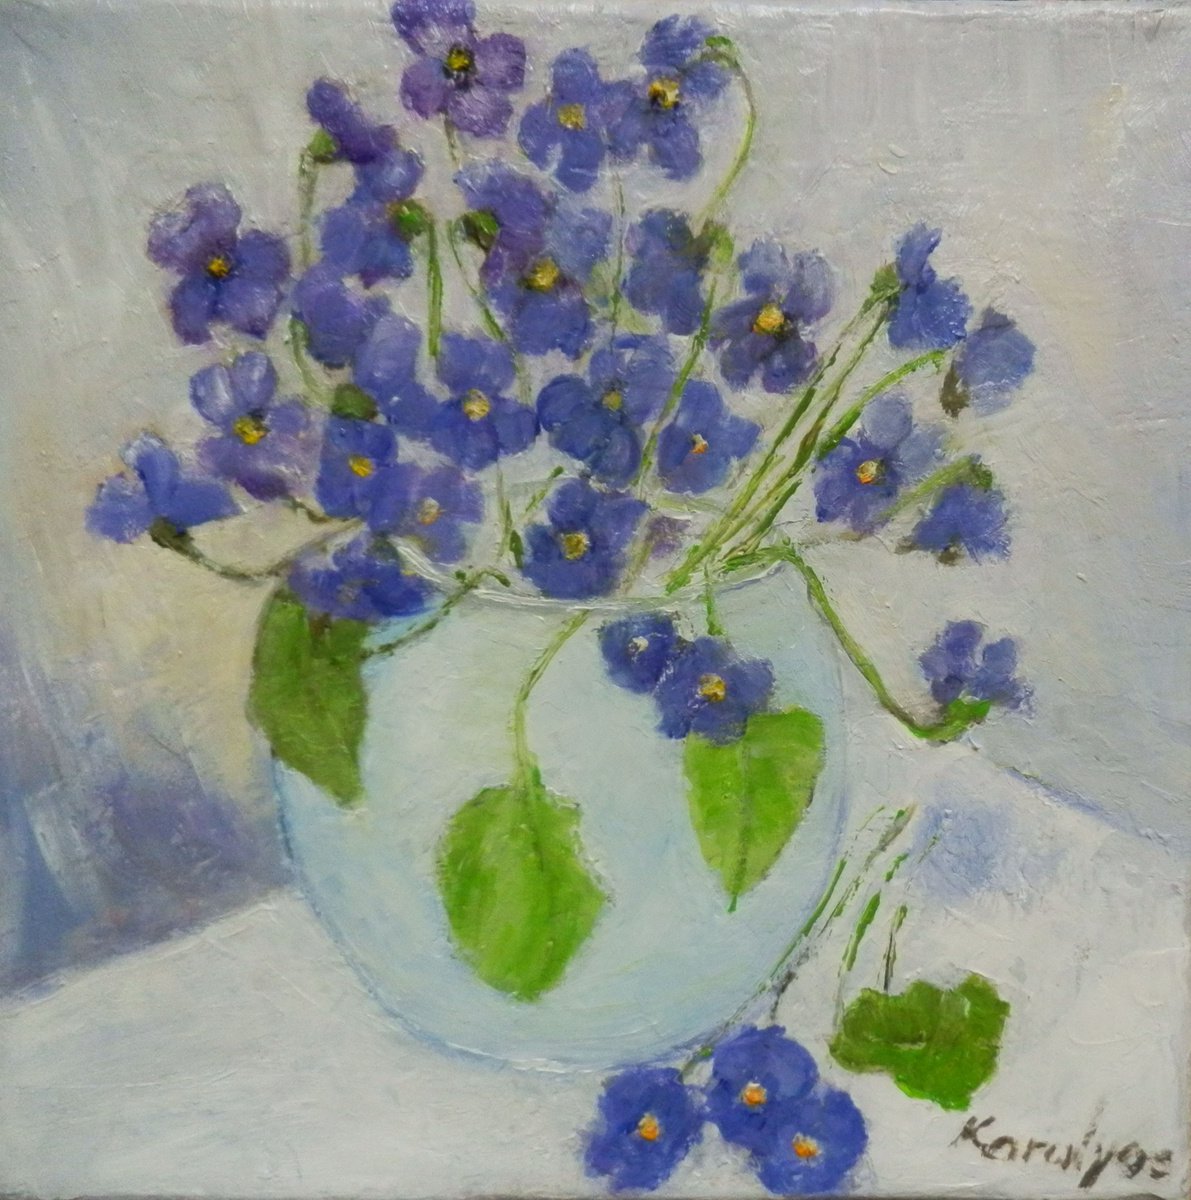 Spring flowers in a vase by Maria Karalyos